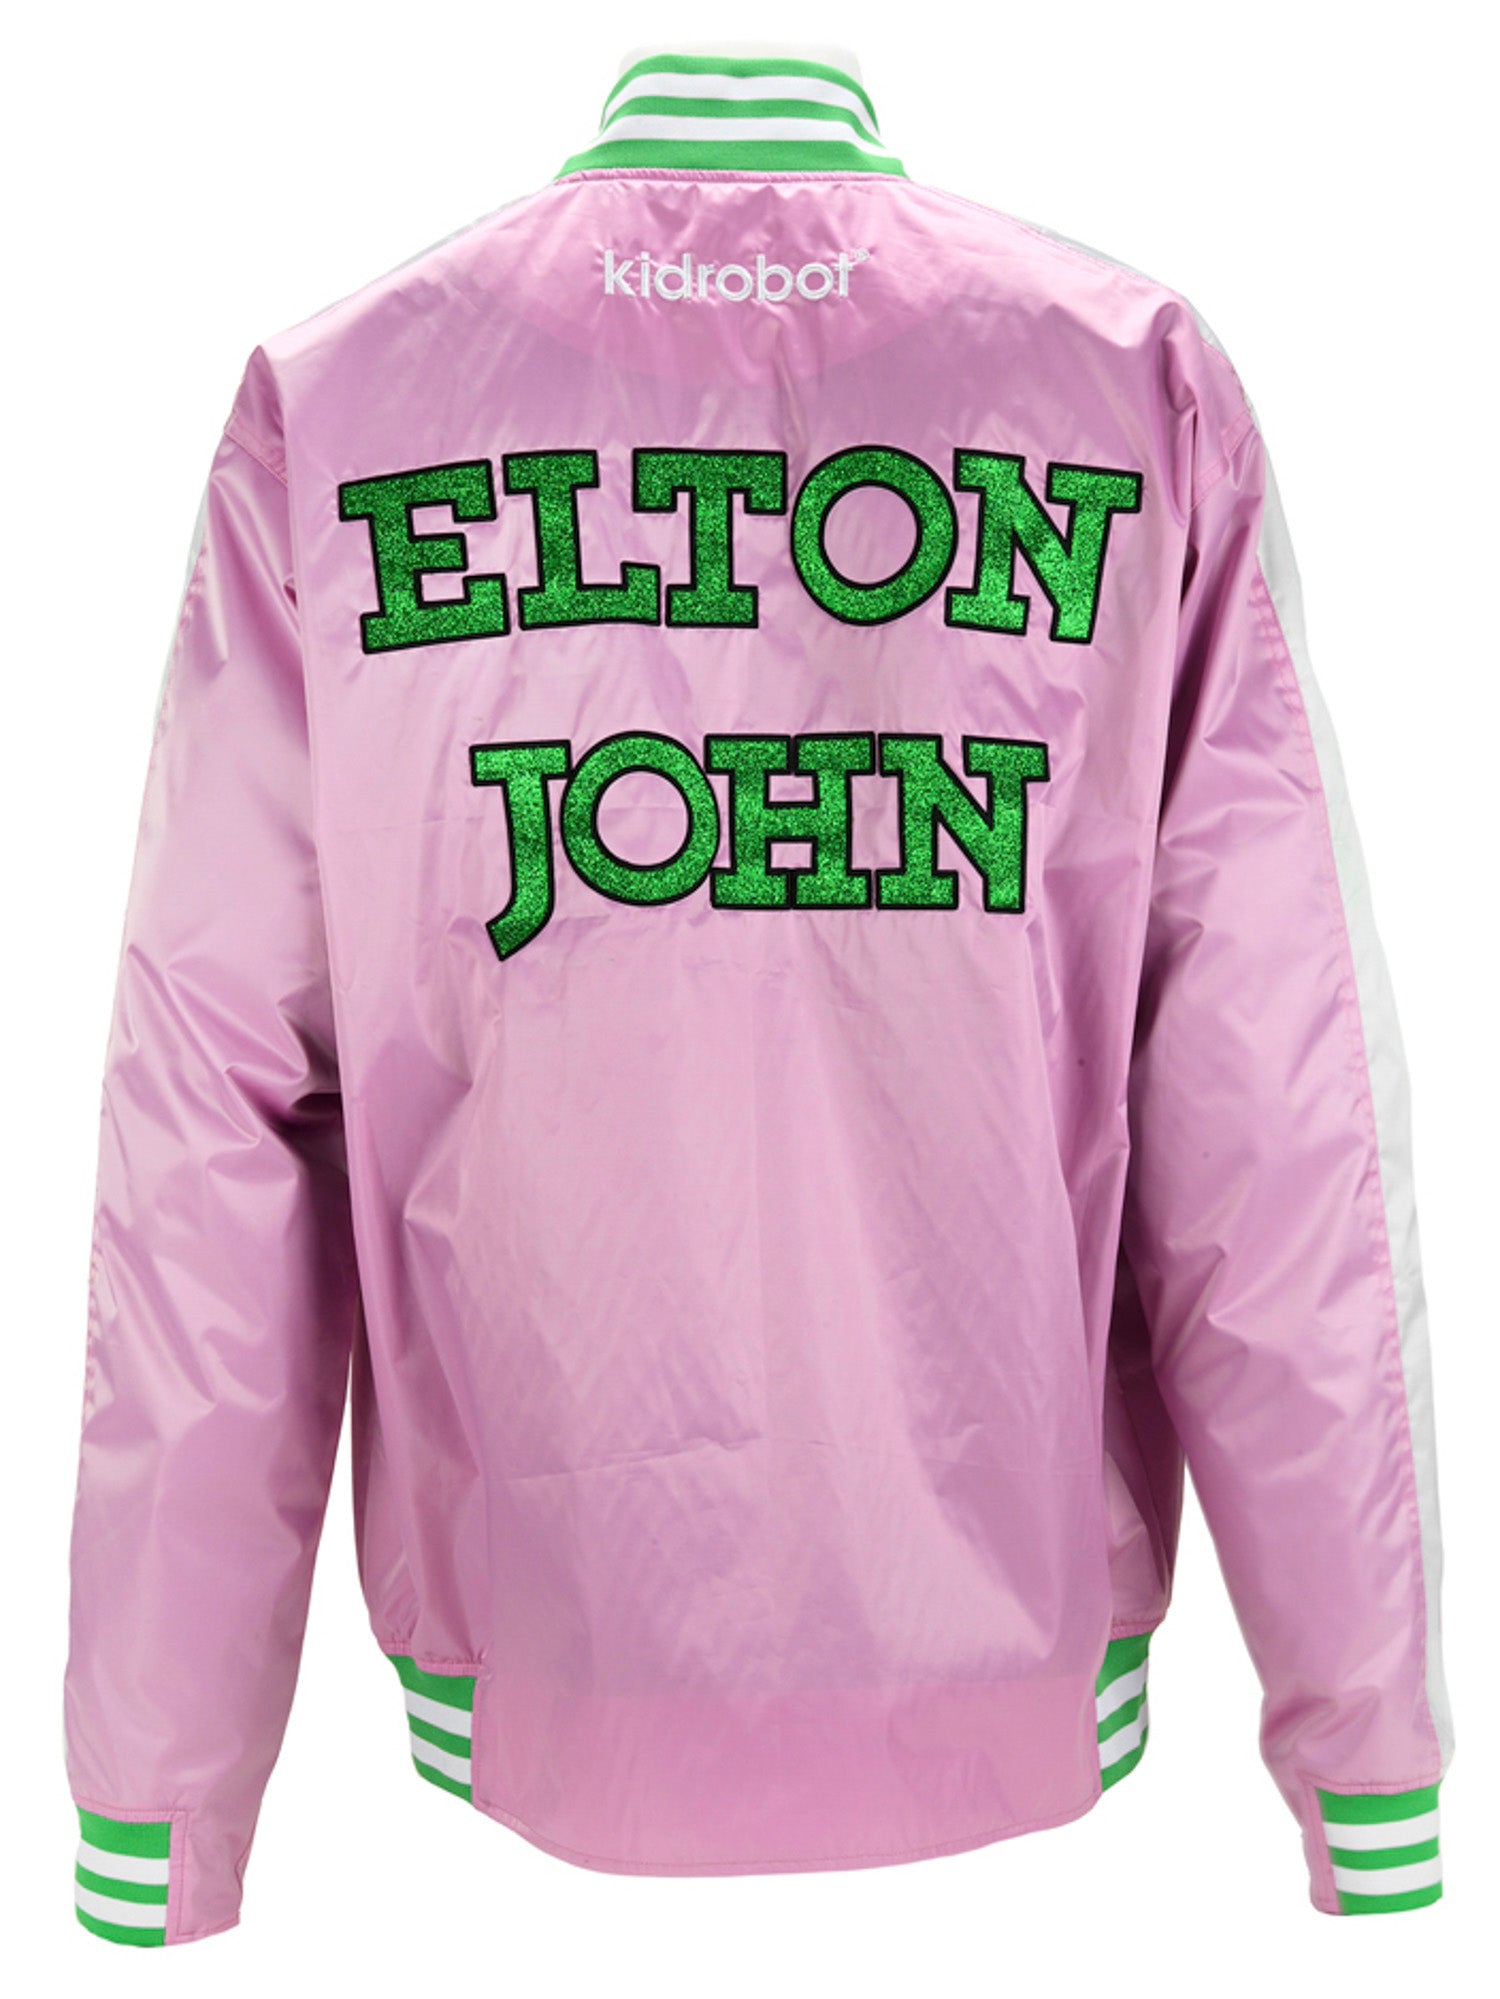 Kidrobot - Elton John "Goodbye Yellow Brick Road" Pink Satin Jacket - Medium - costumes.com